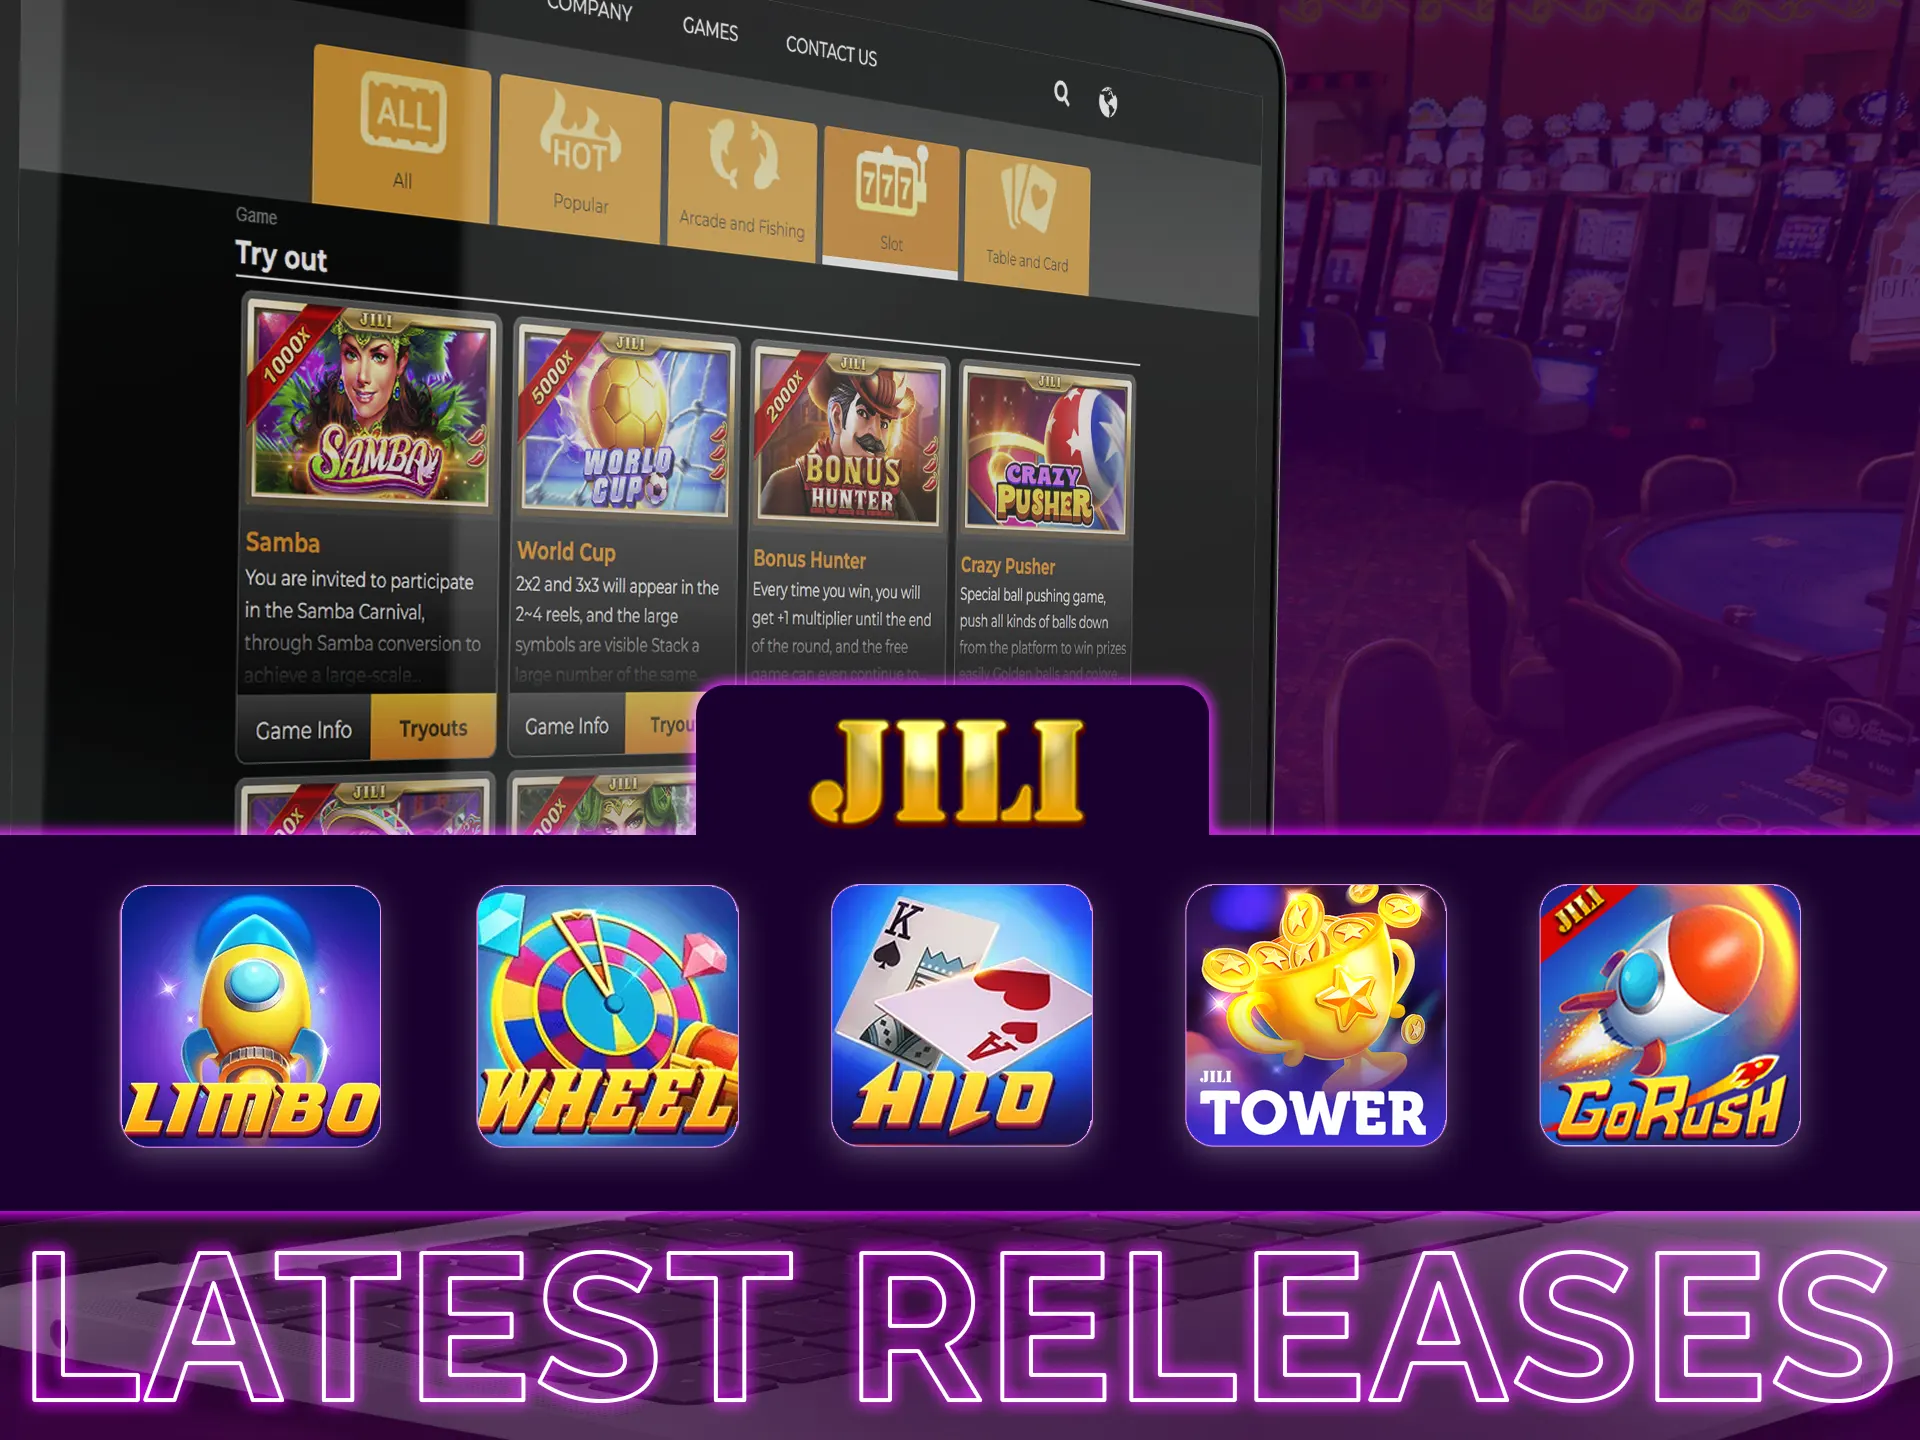 Jili's latest releases include Limbo, Wheel, Hi-lo, Tower, and Go Rush.